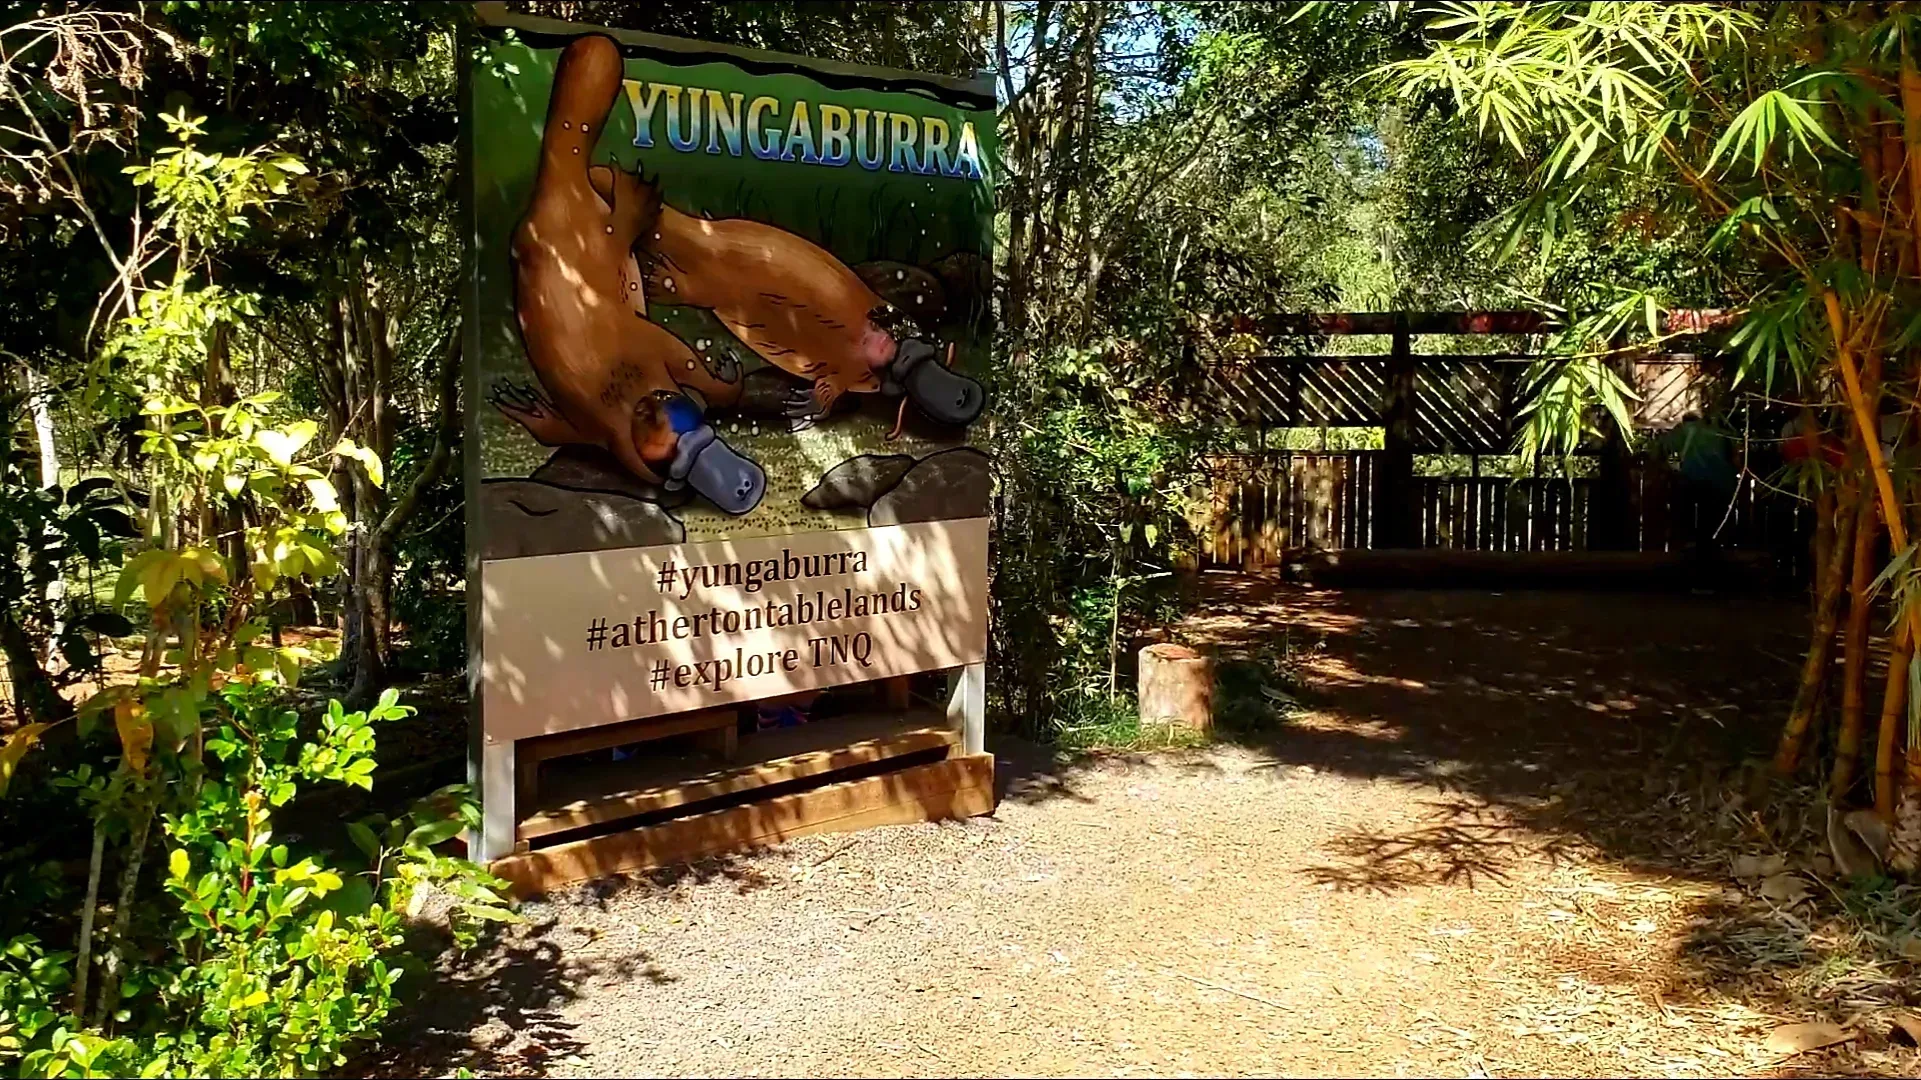 yungaburra platypus viewing